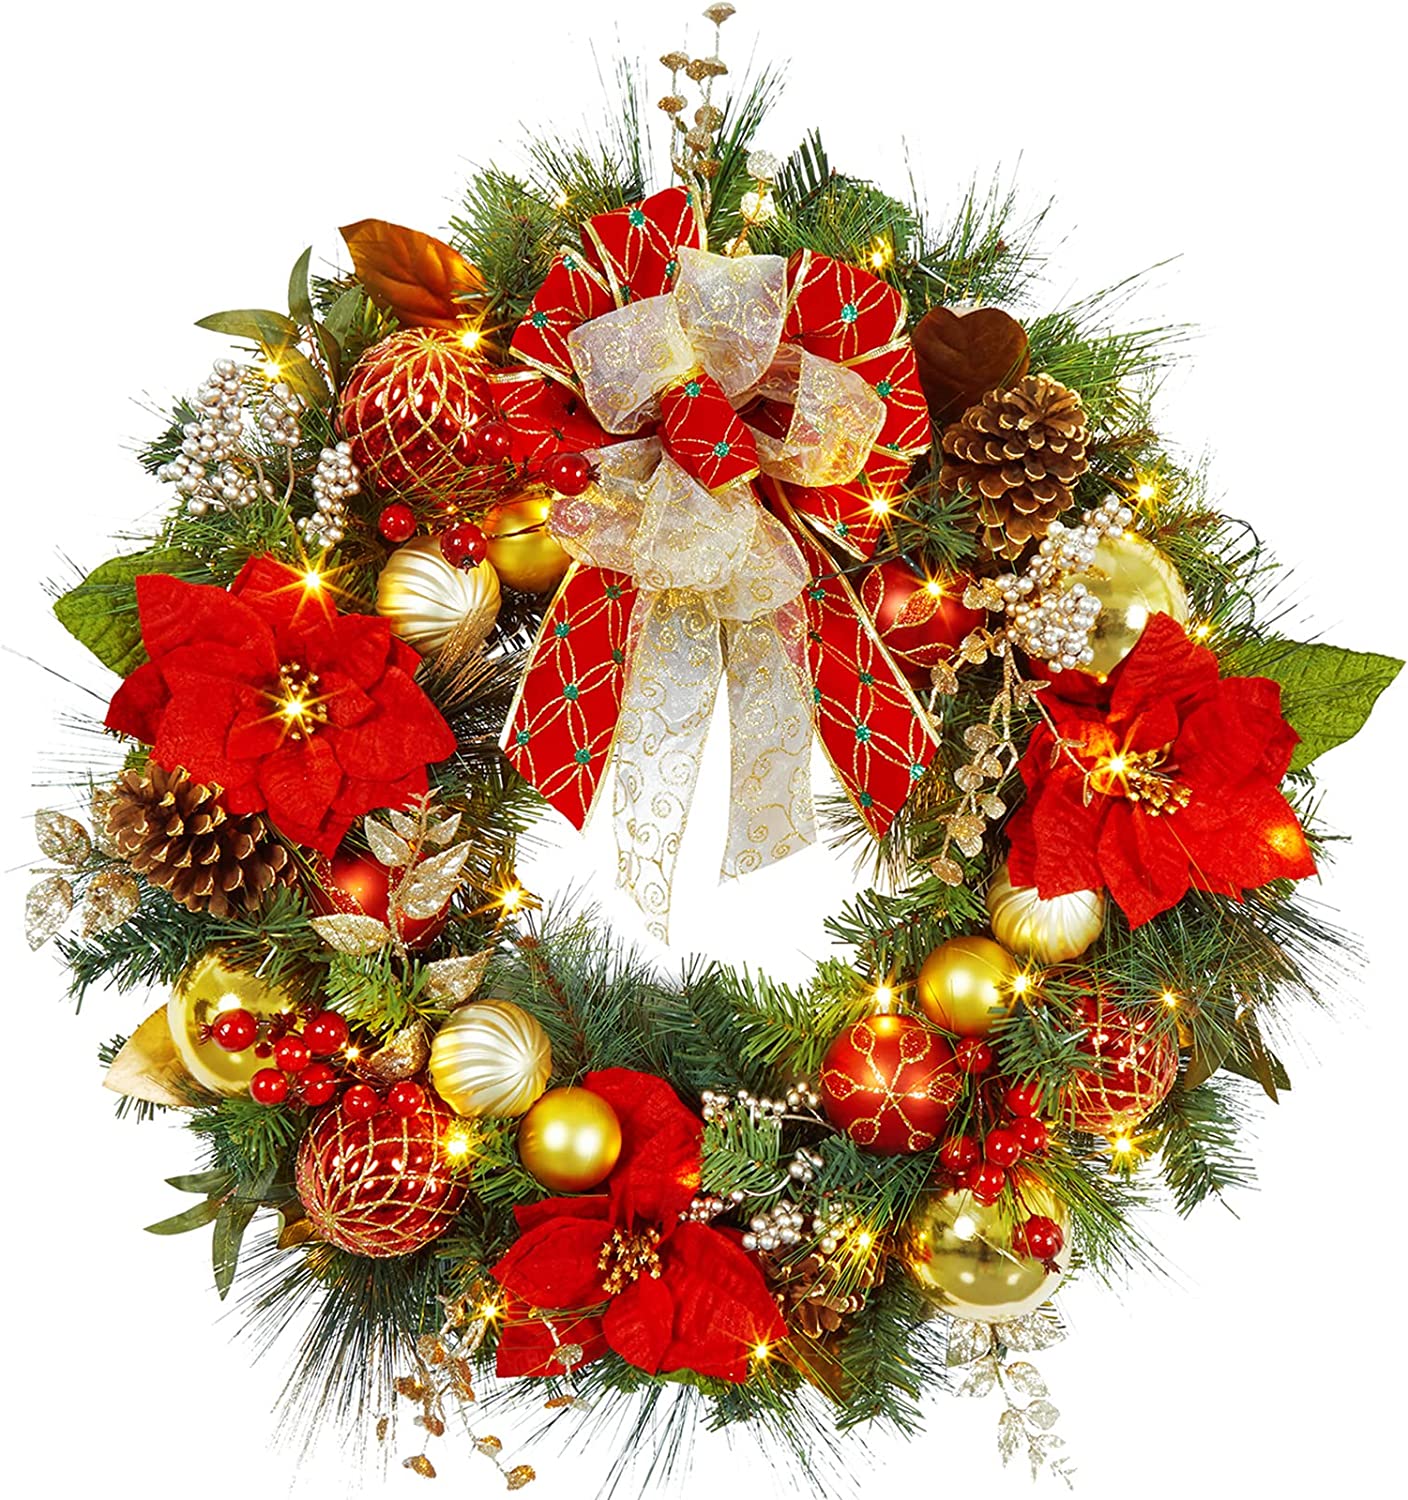 Adeeing Christmas Wreath with Lights